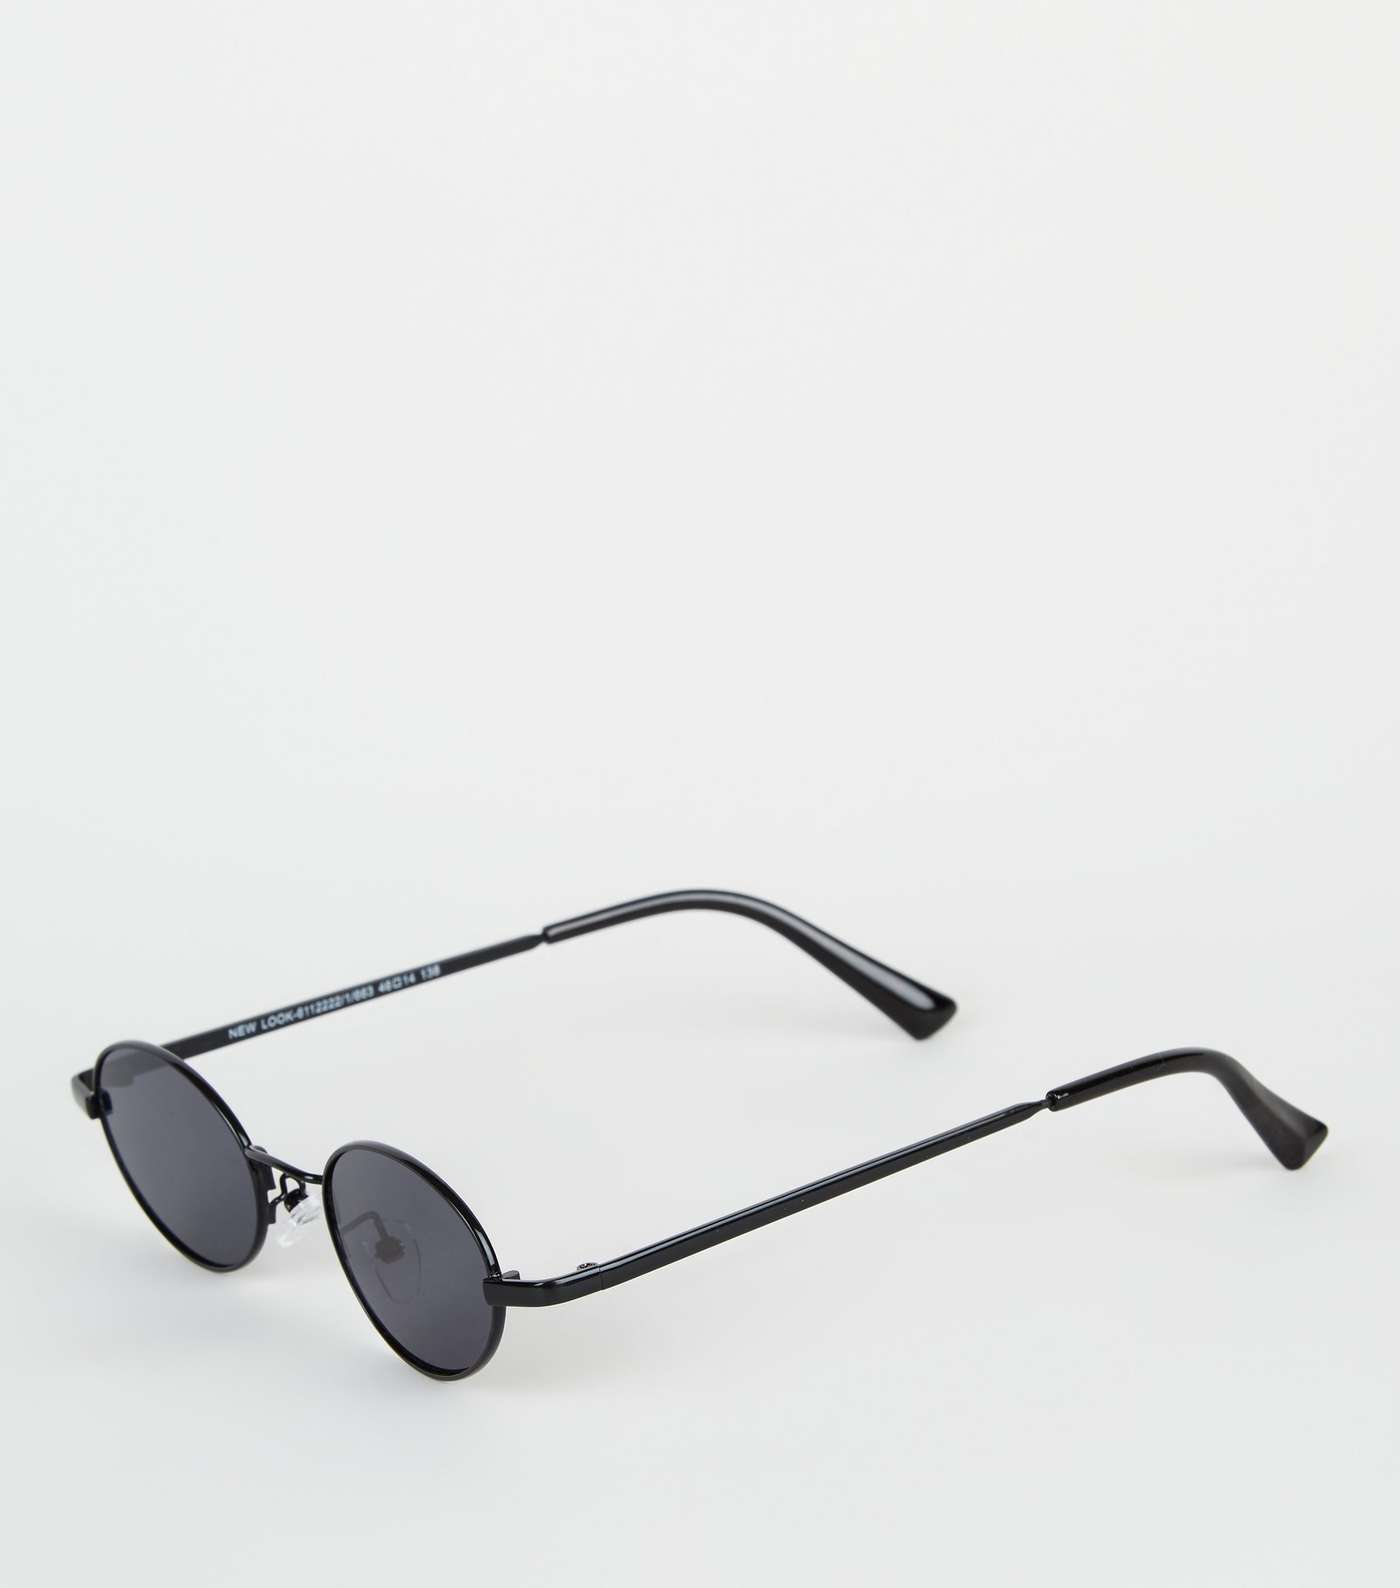 Black Mini Oval Sunglasses